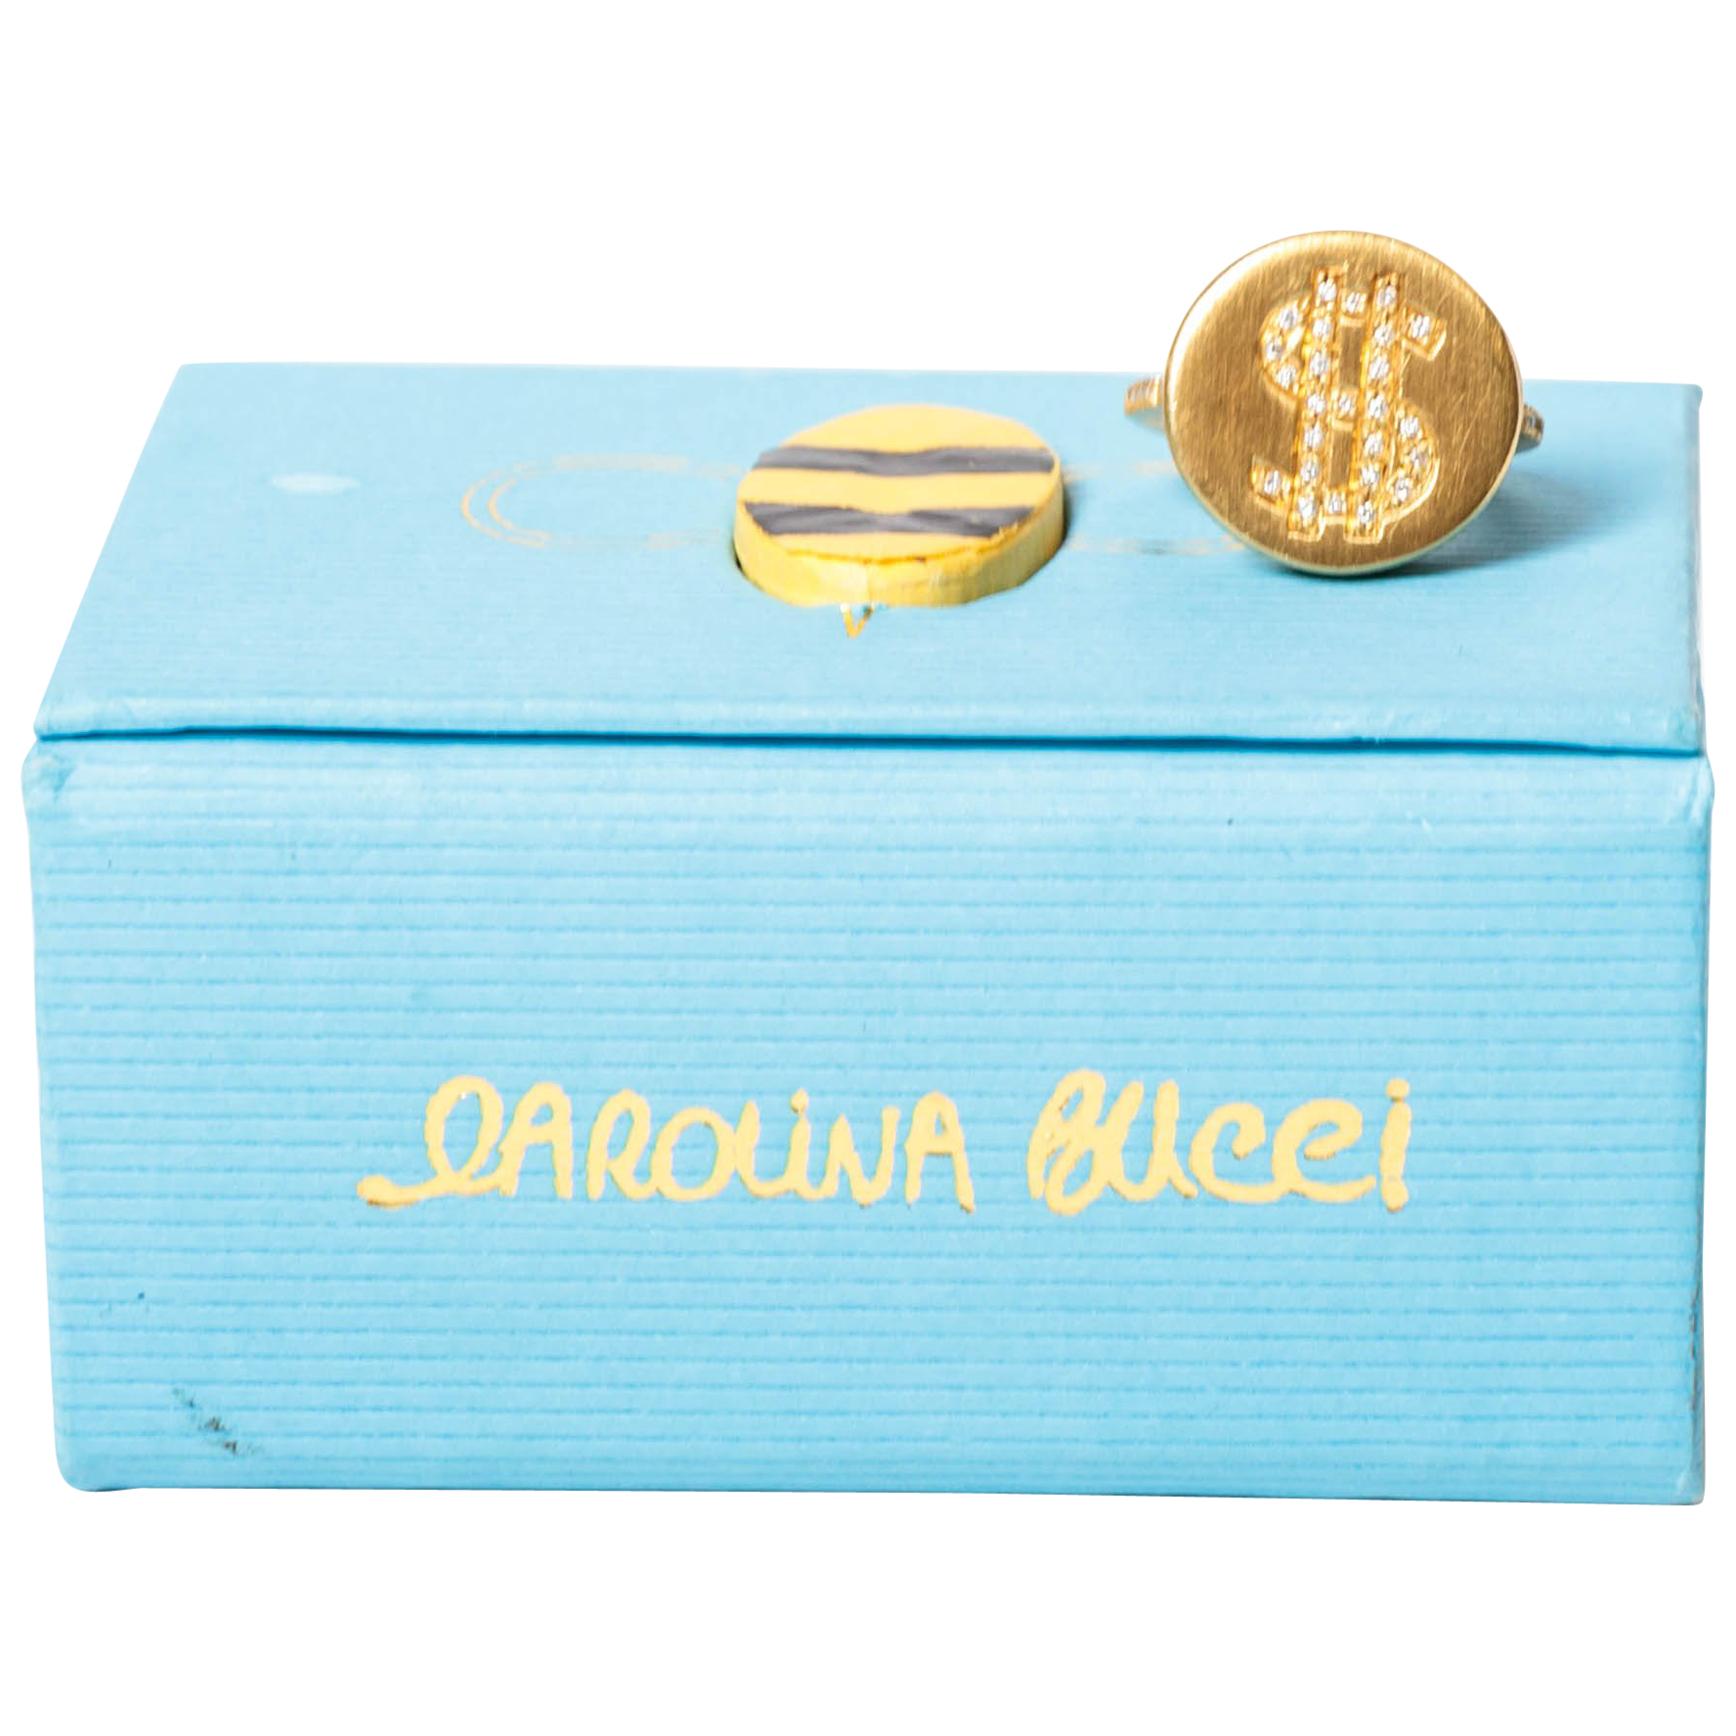 Carolina Bucci 18 Kt and Diamond Ring - Size 4 For Sale